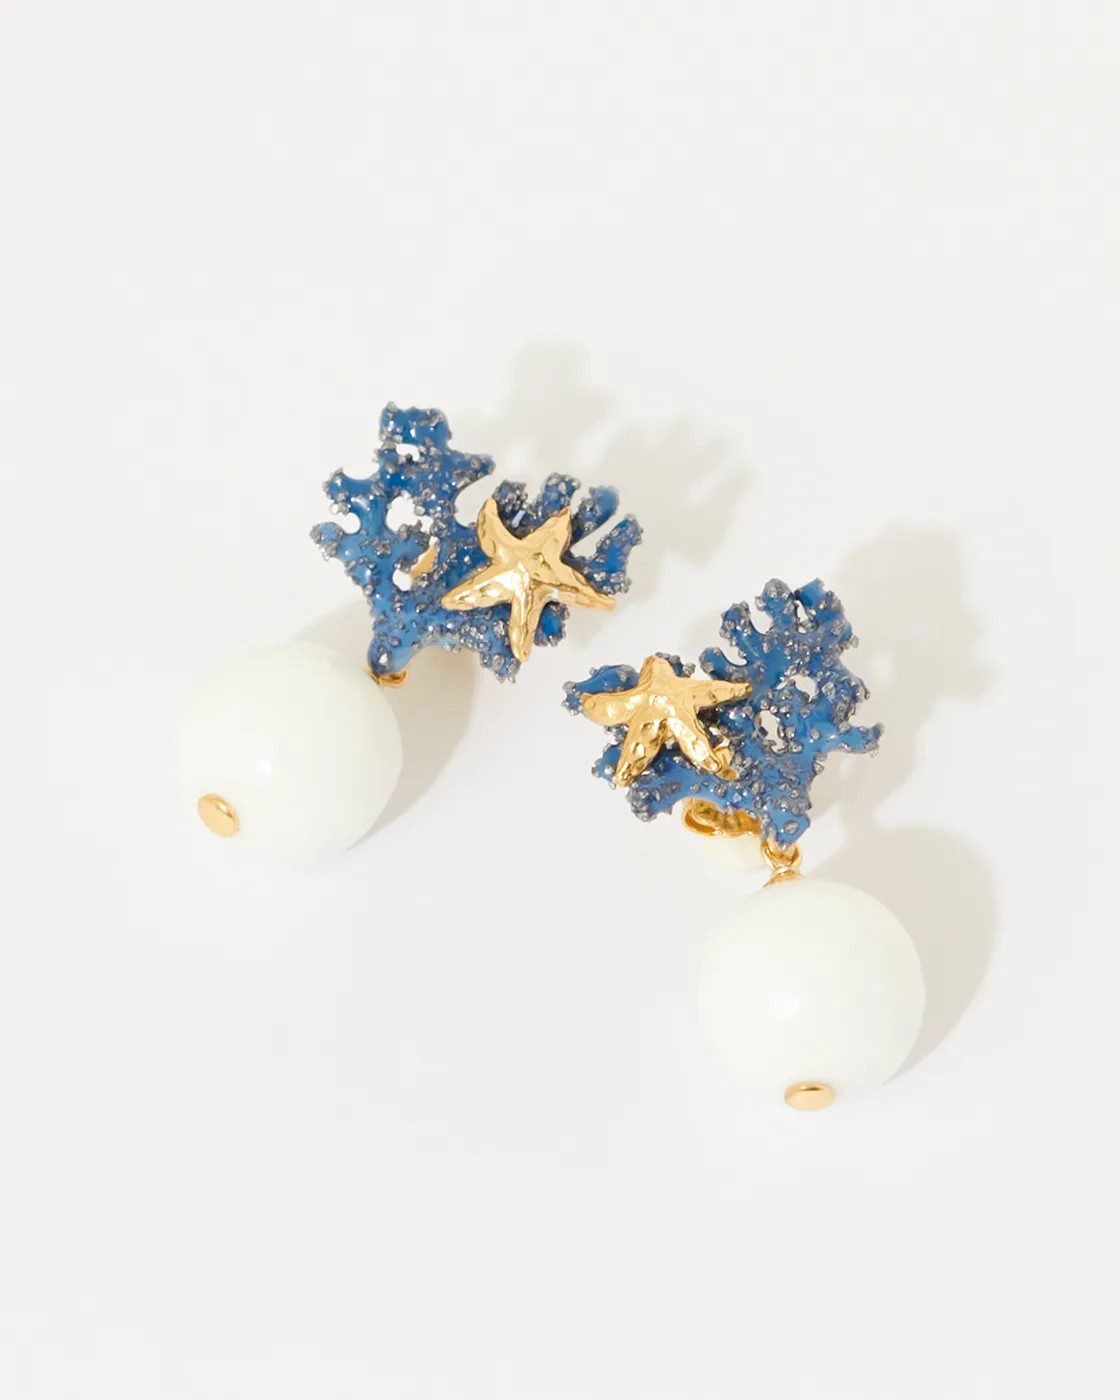 Positano Studs with White Agate Drops